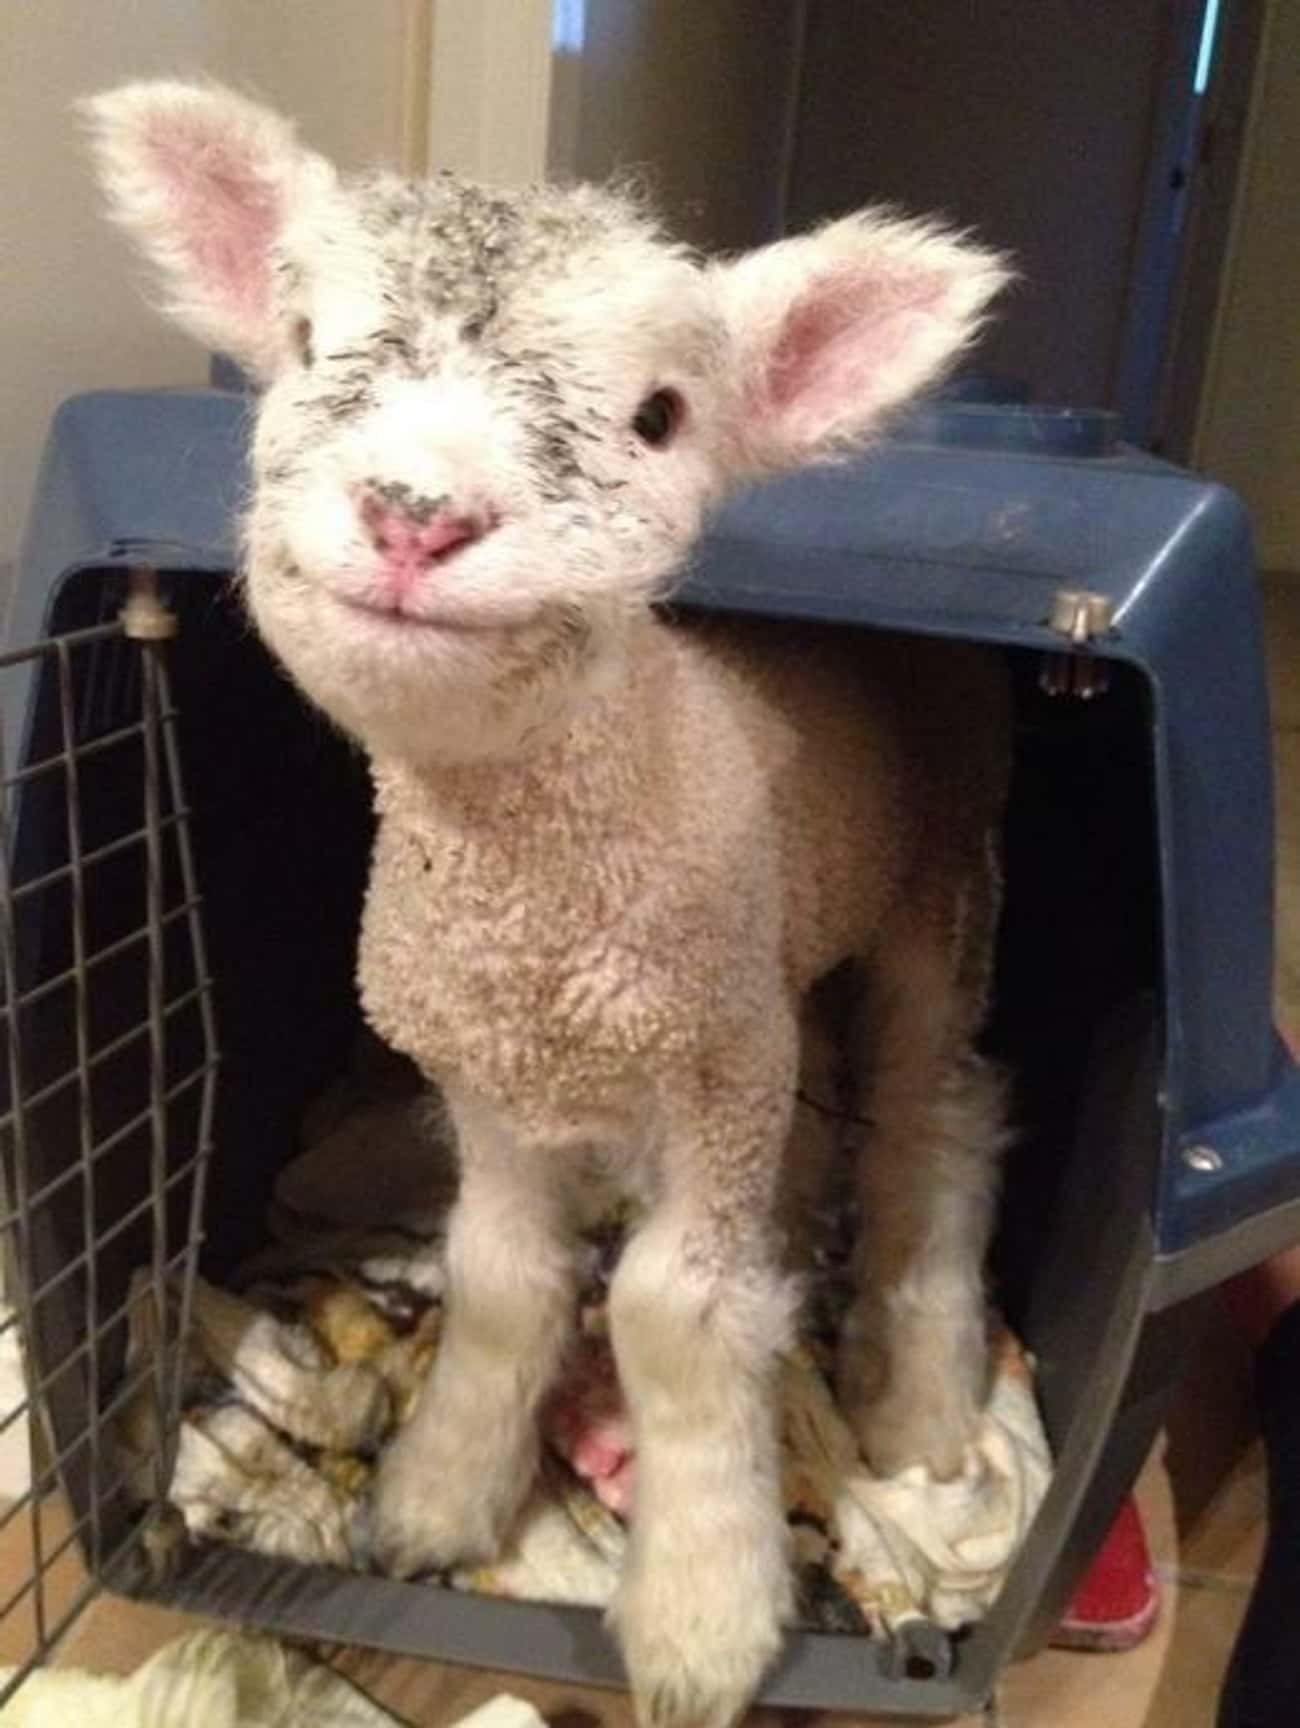 This Smiling Baby Lamb